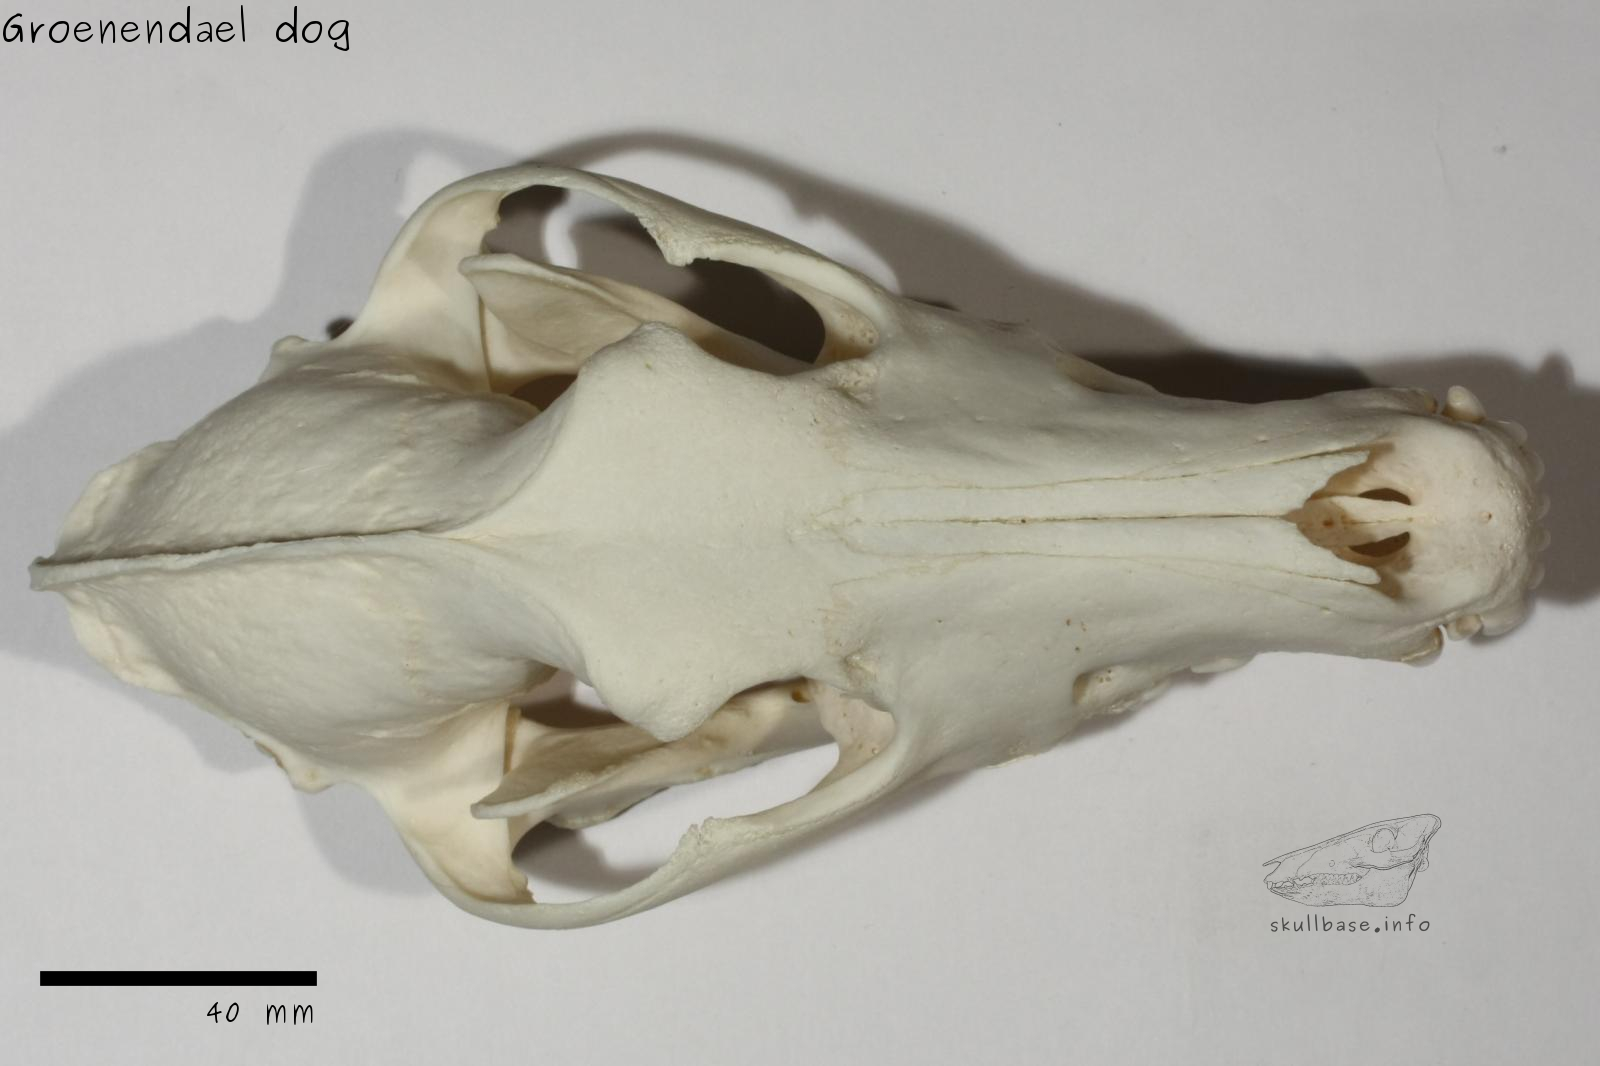 Groenendael dog (Canis lupus familiaris) skull dorsal view